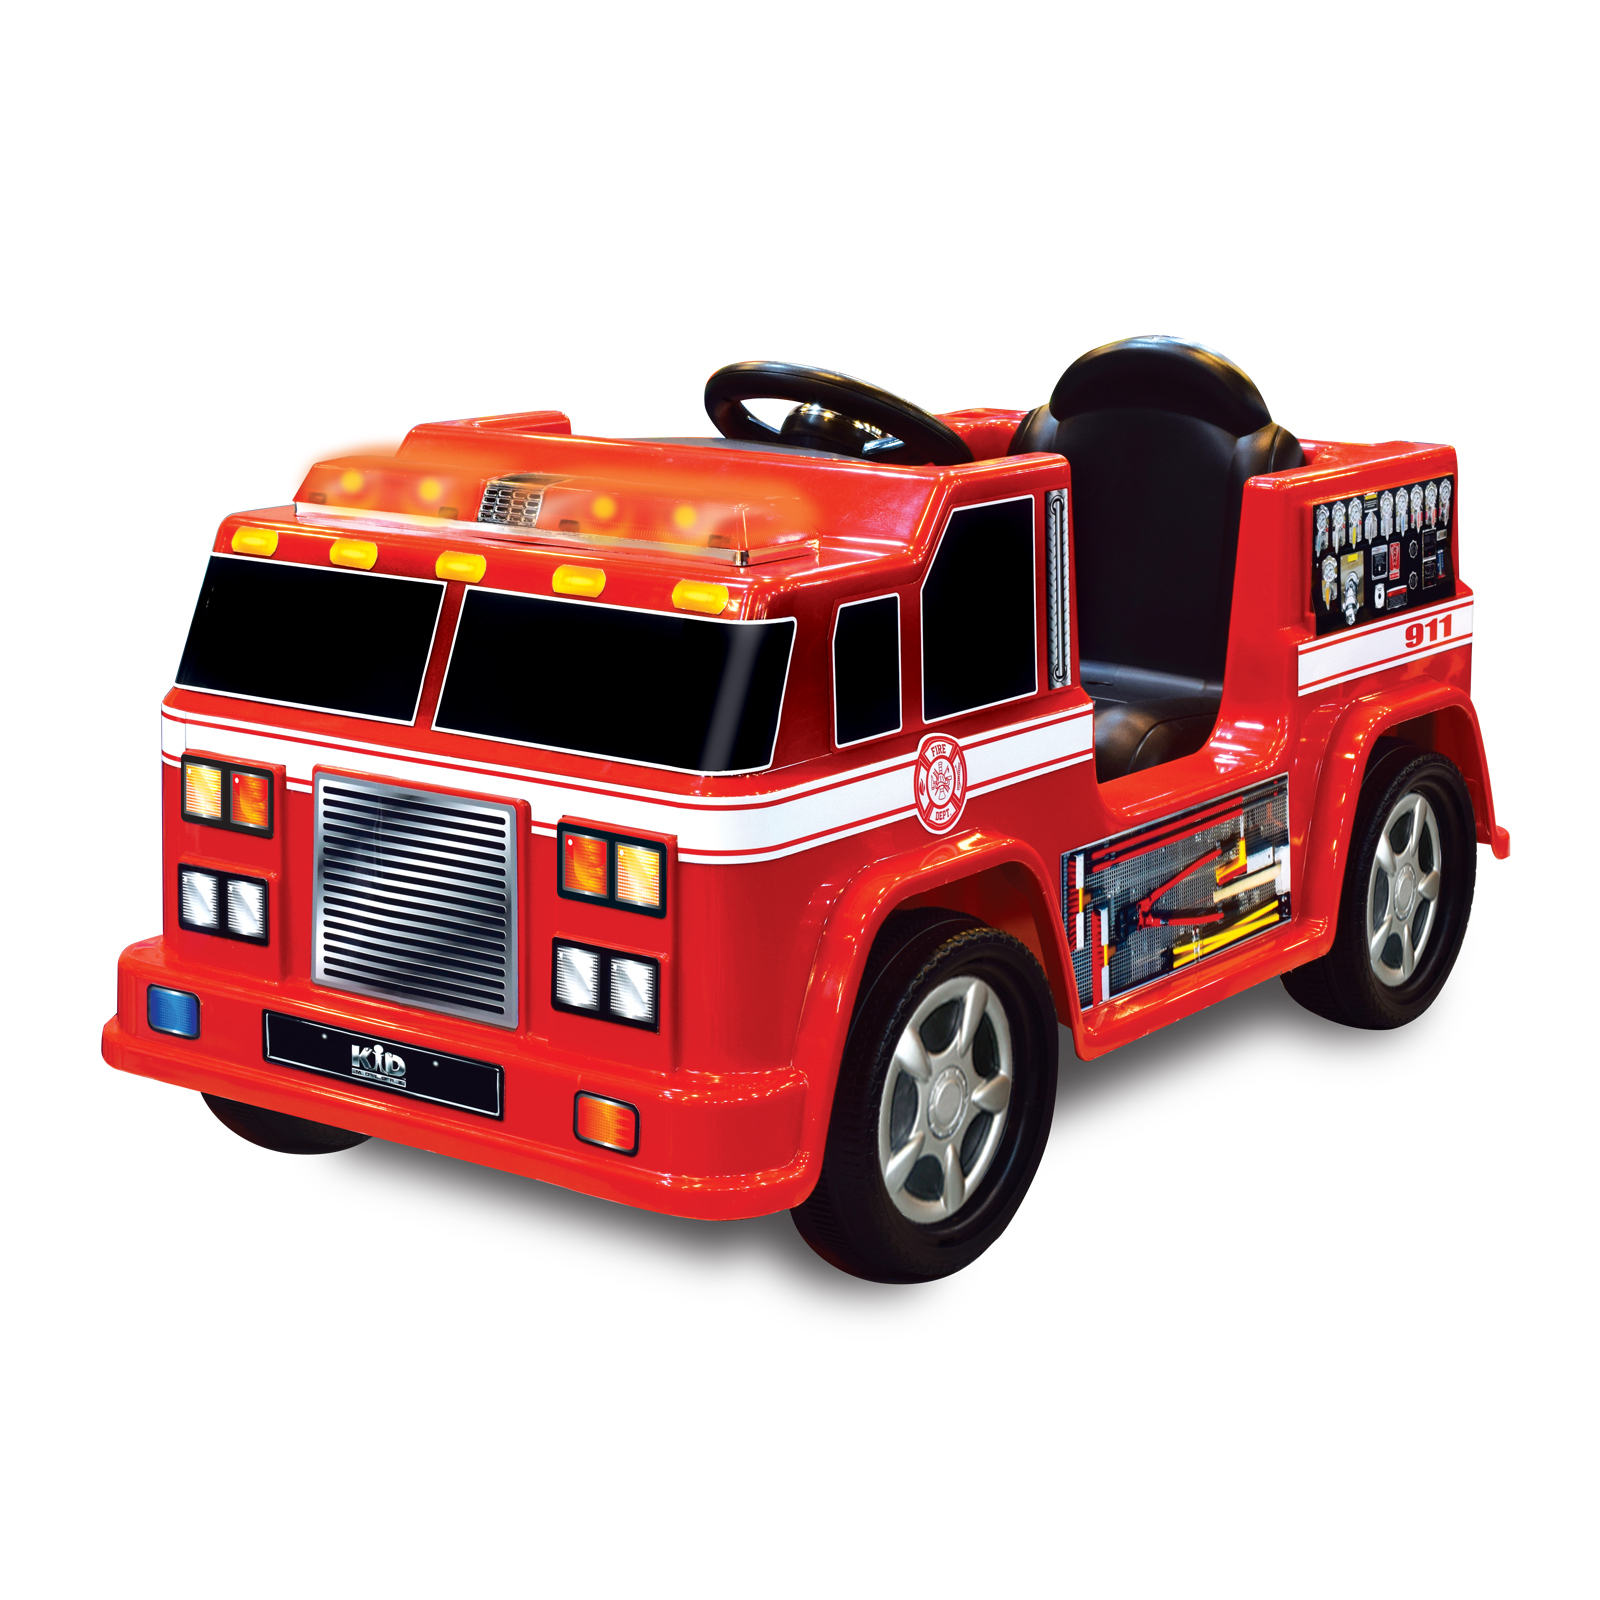 Toy metal fire trucks